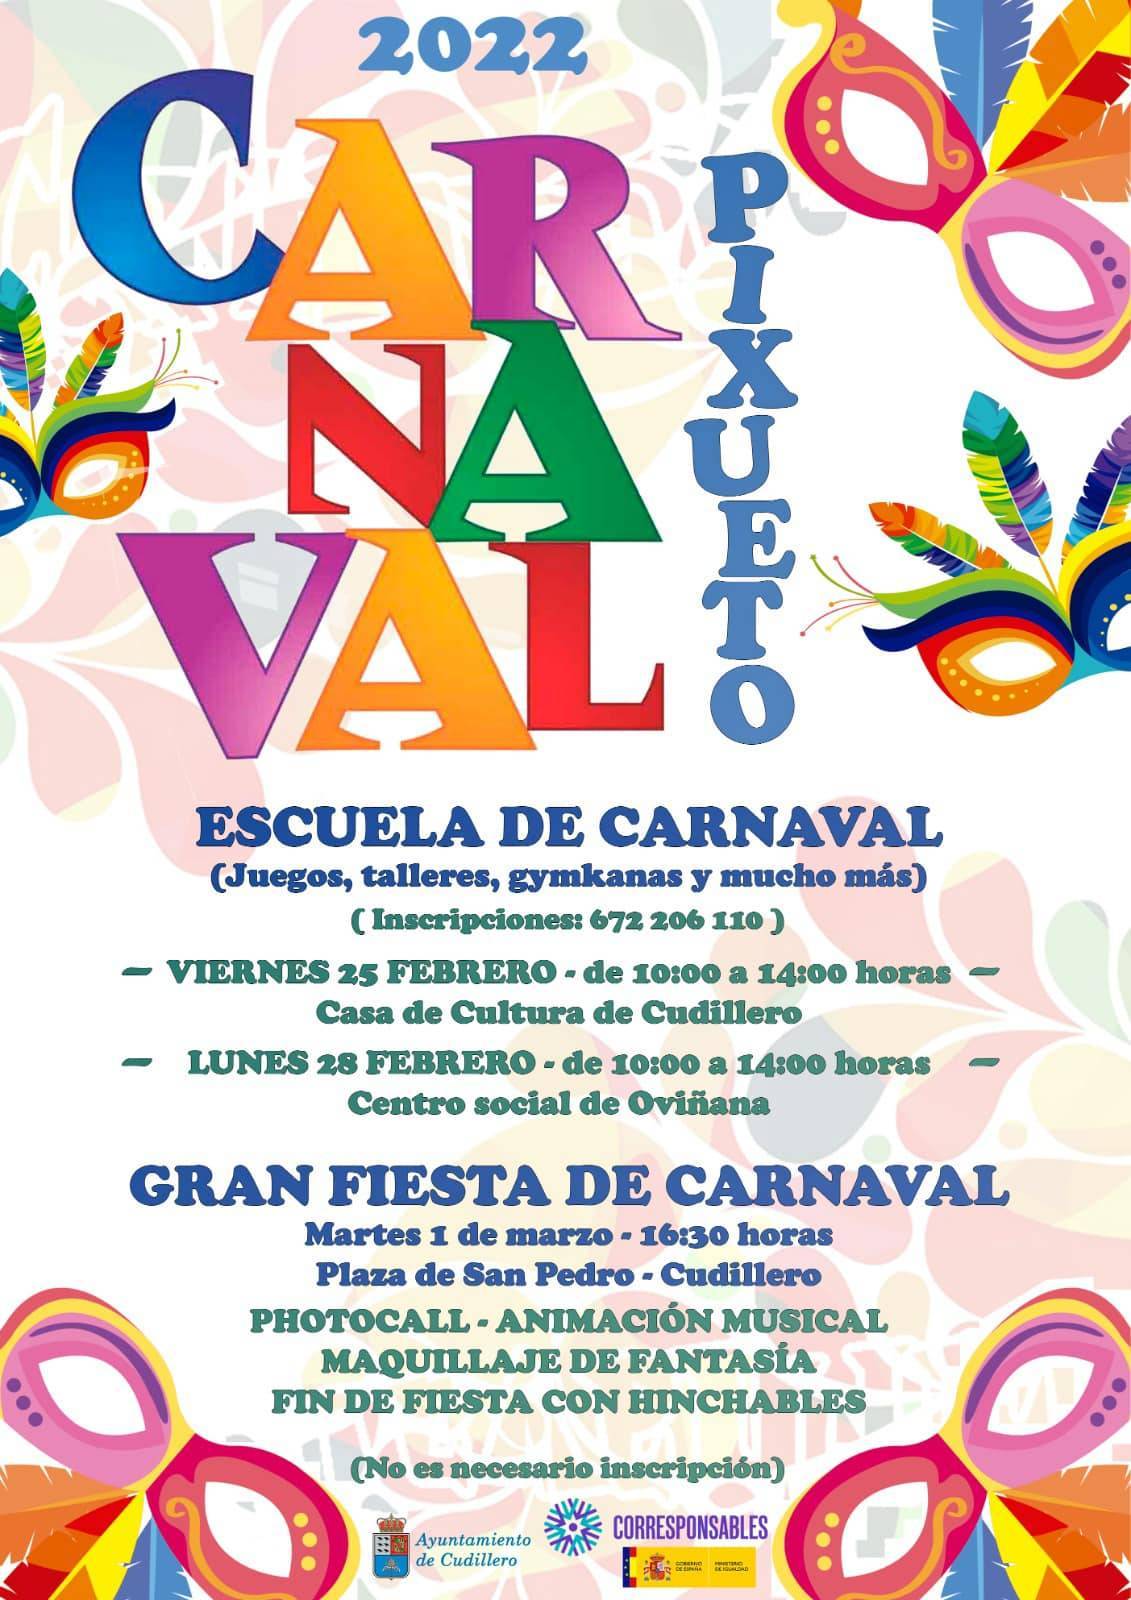 Carnaval (2022) - Cudillero (Asturias)